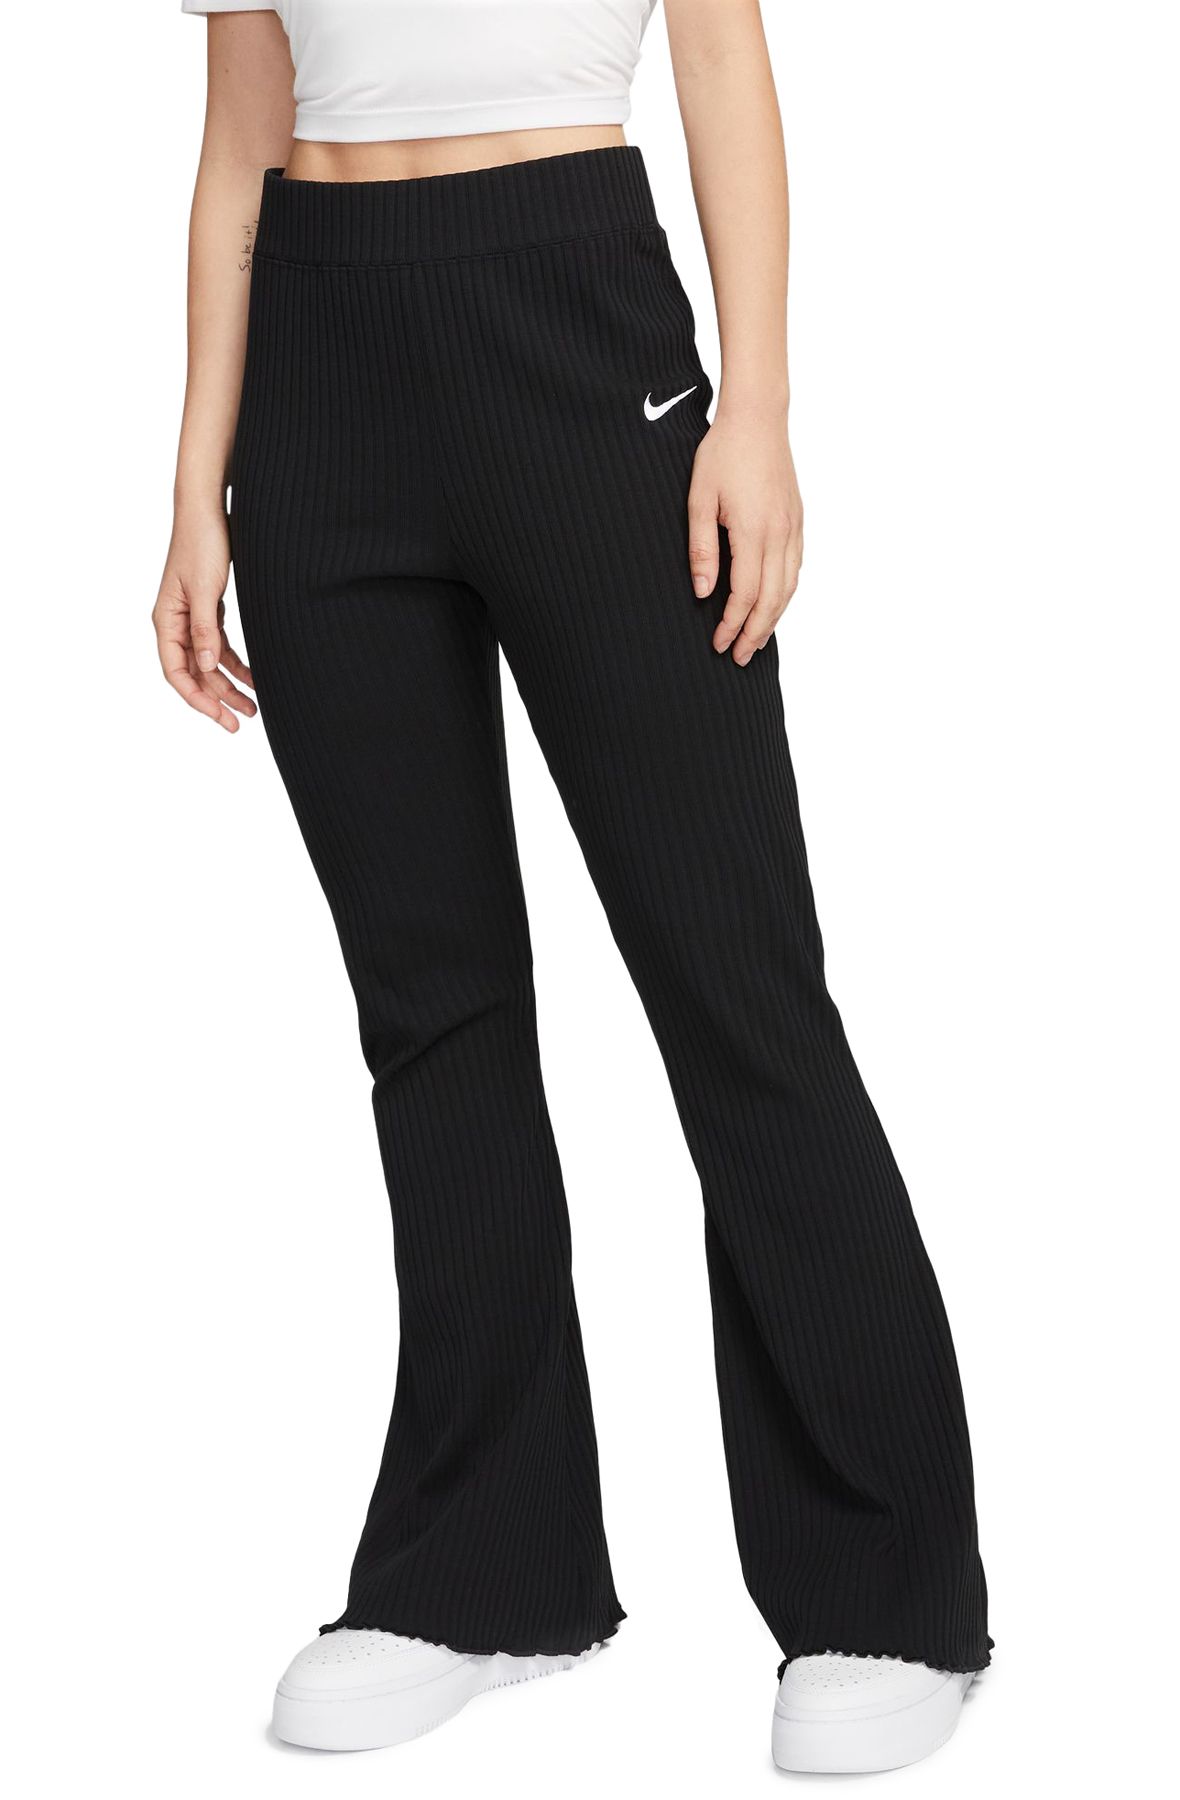 NIKE Womens NWT Loose Fit Sportswear Jersey Capri Pants Black Size L  CJ3748-010